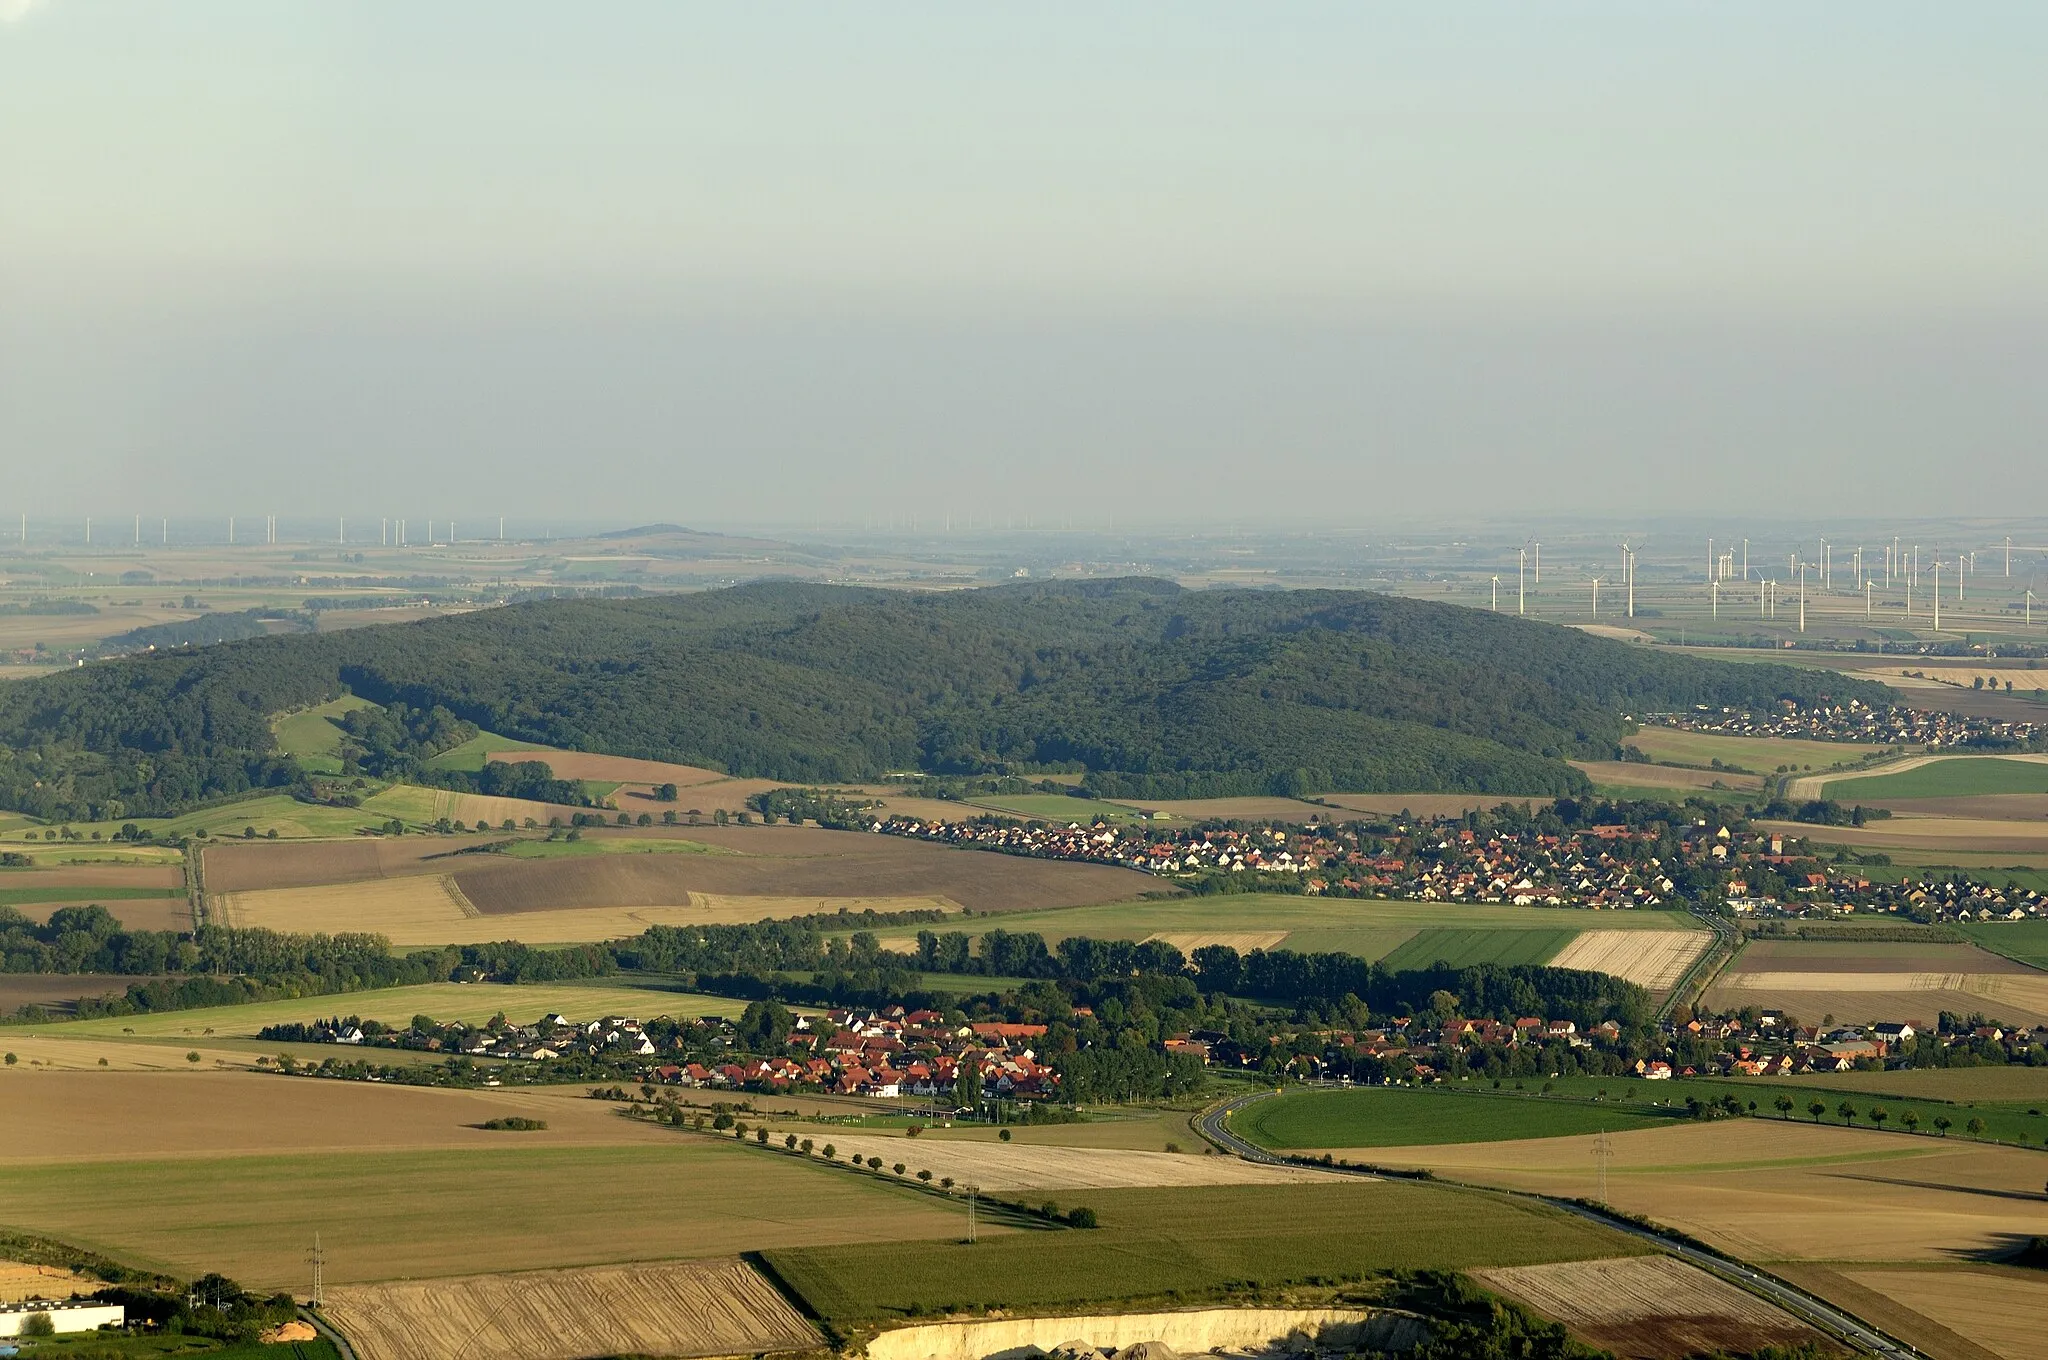 Photo showing: The ridge "Asse" south of Wolfenbüttel and Braunschweig (Brunswick), Germany